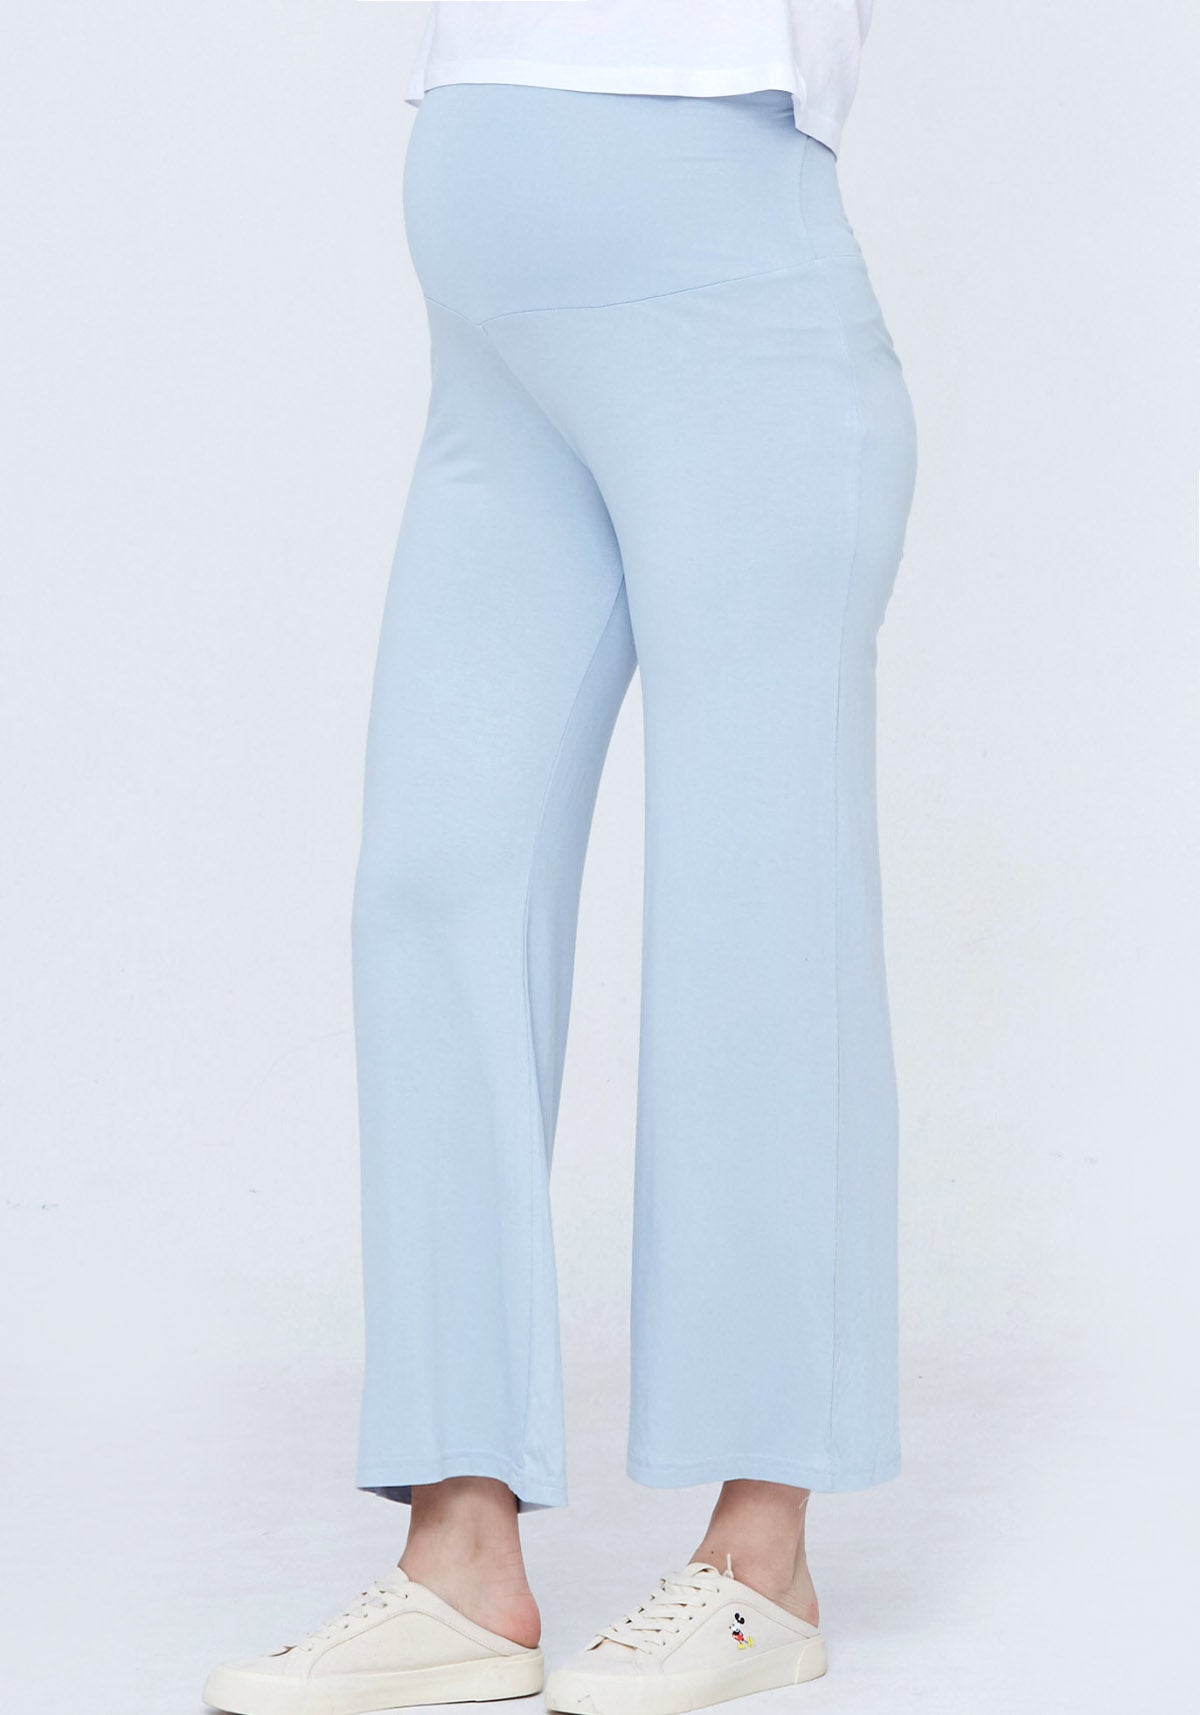 Grace Bamboo Yoga Pants (Indigo Blue)